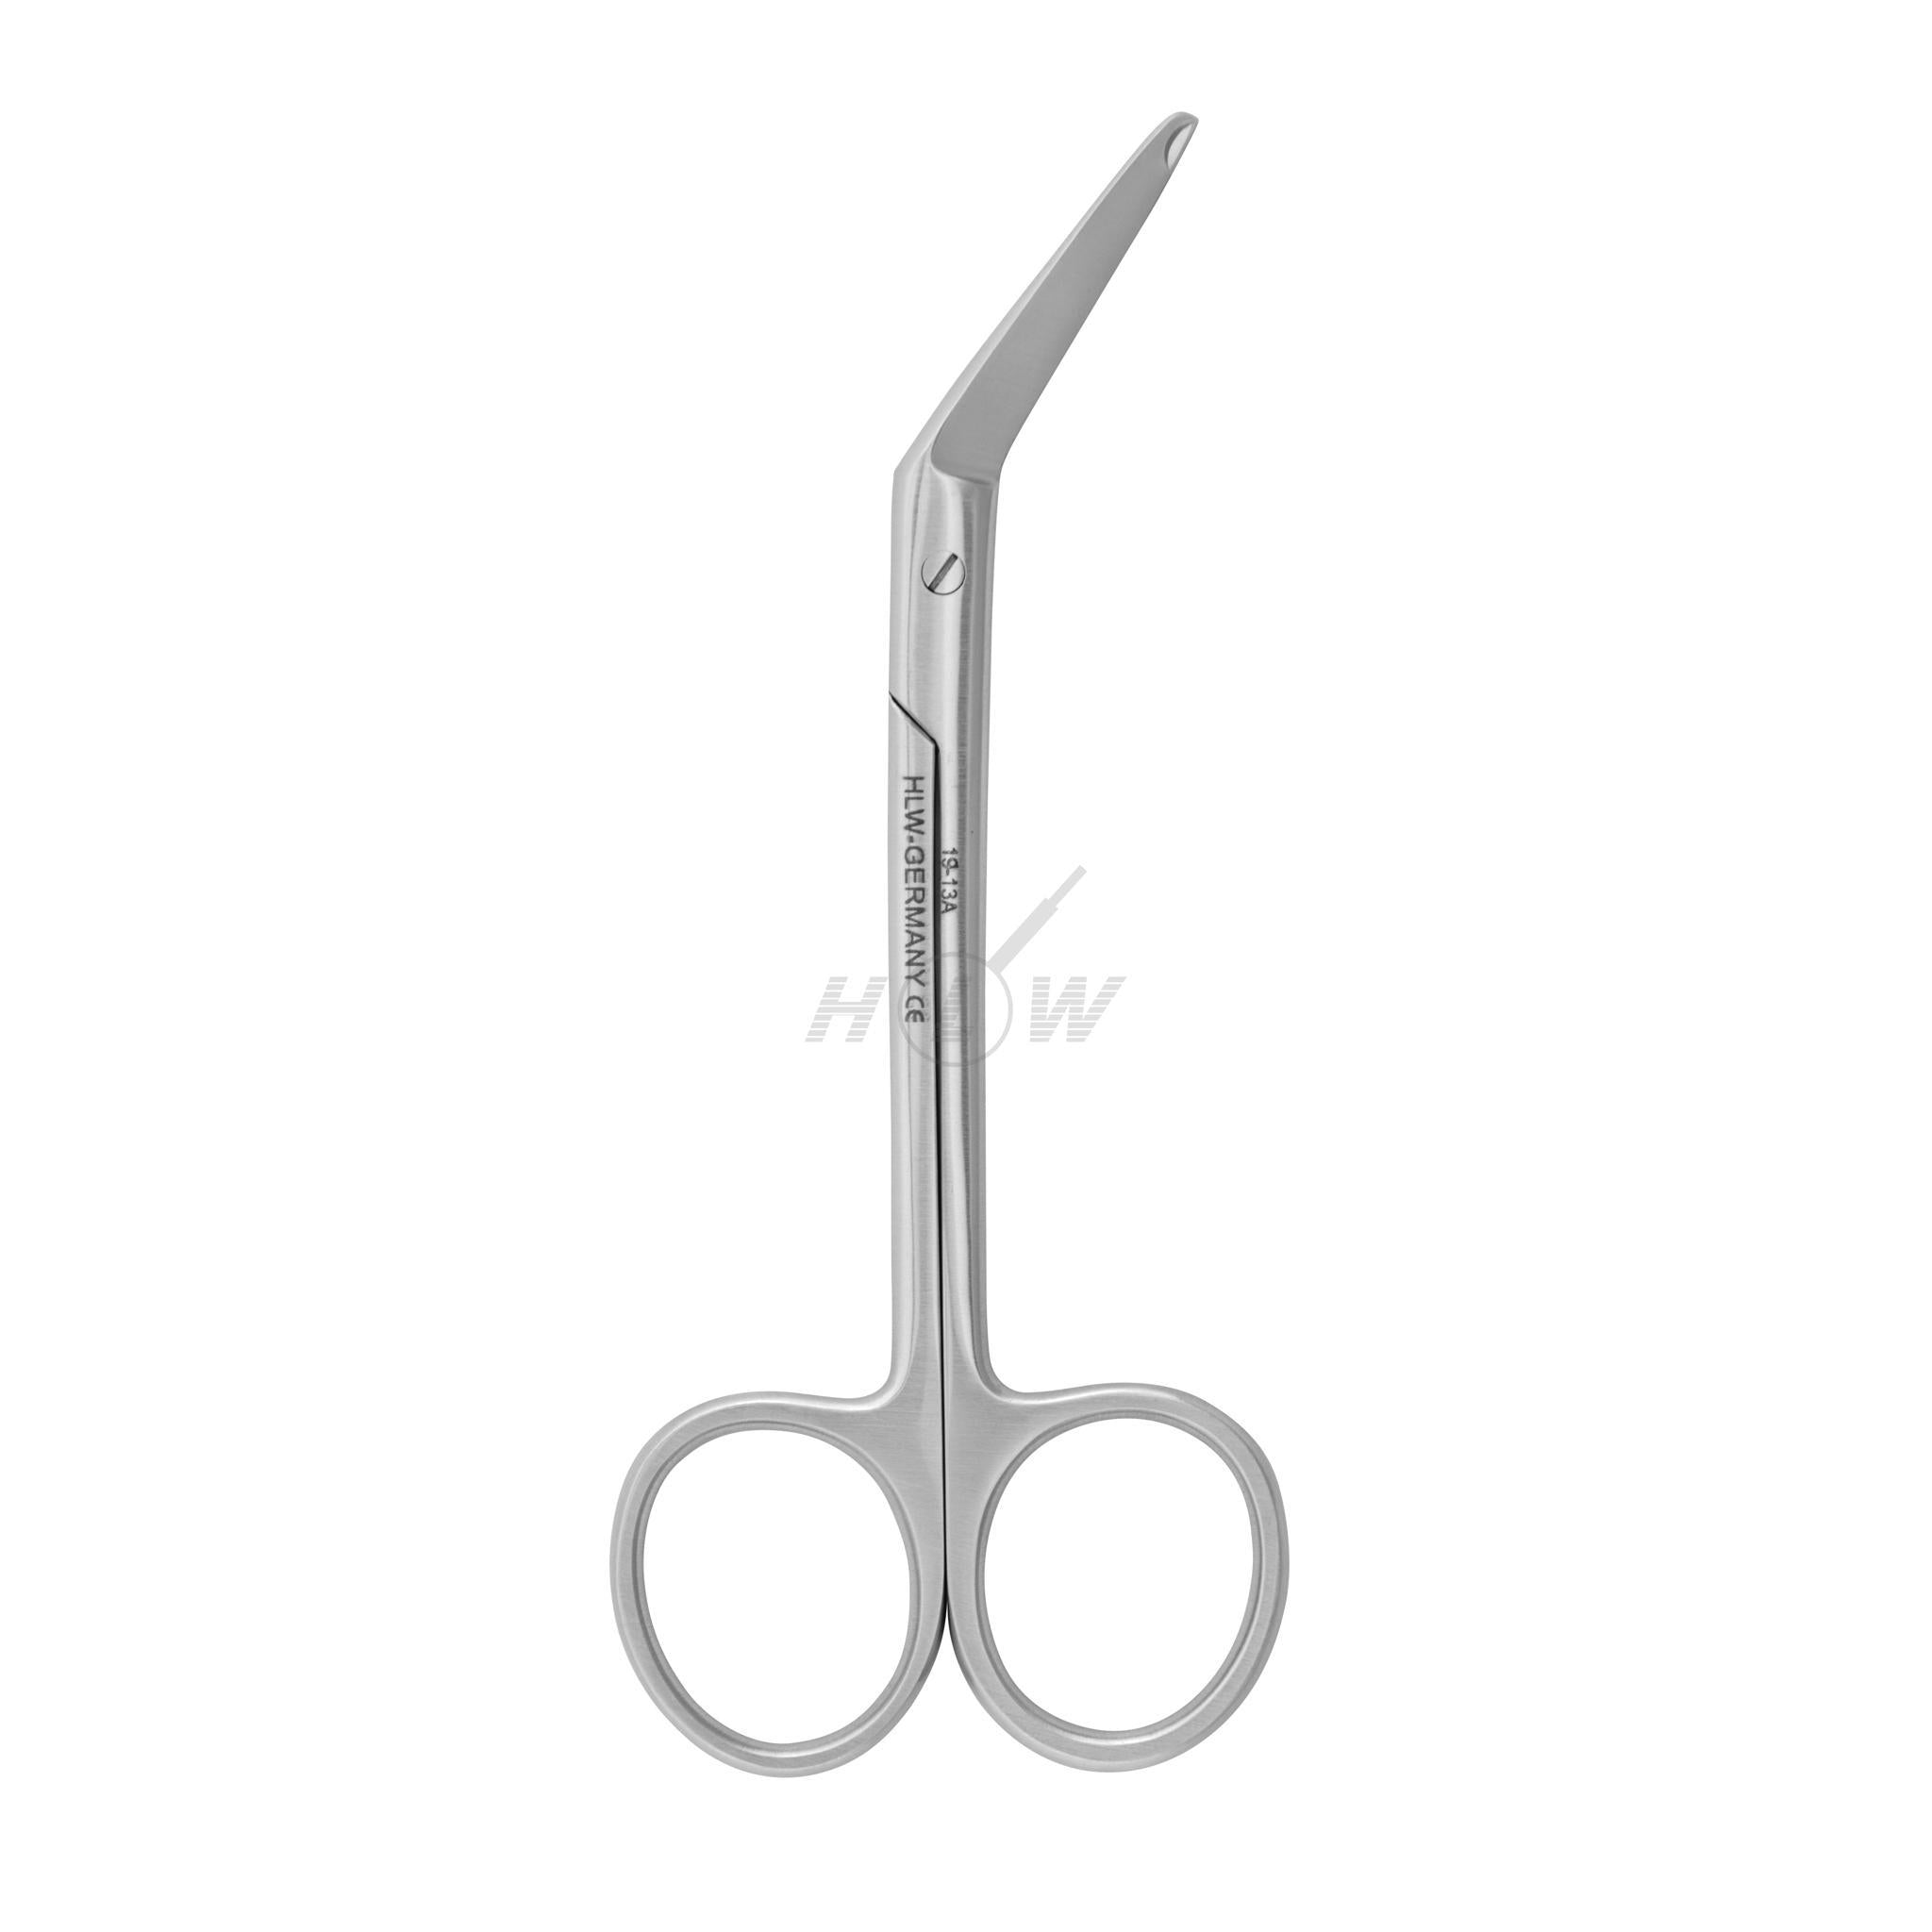 Seam scissors angled 11.5cm